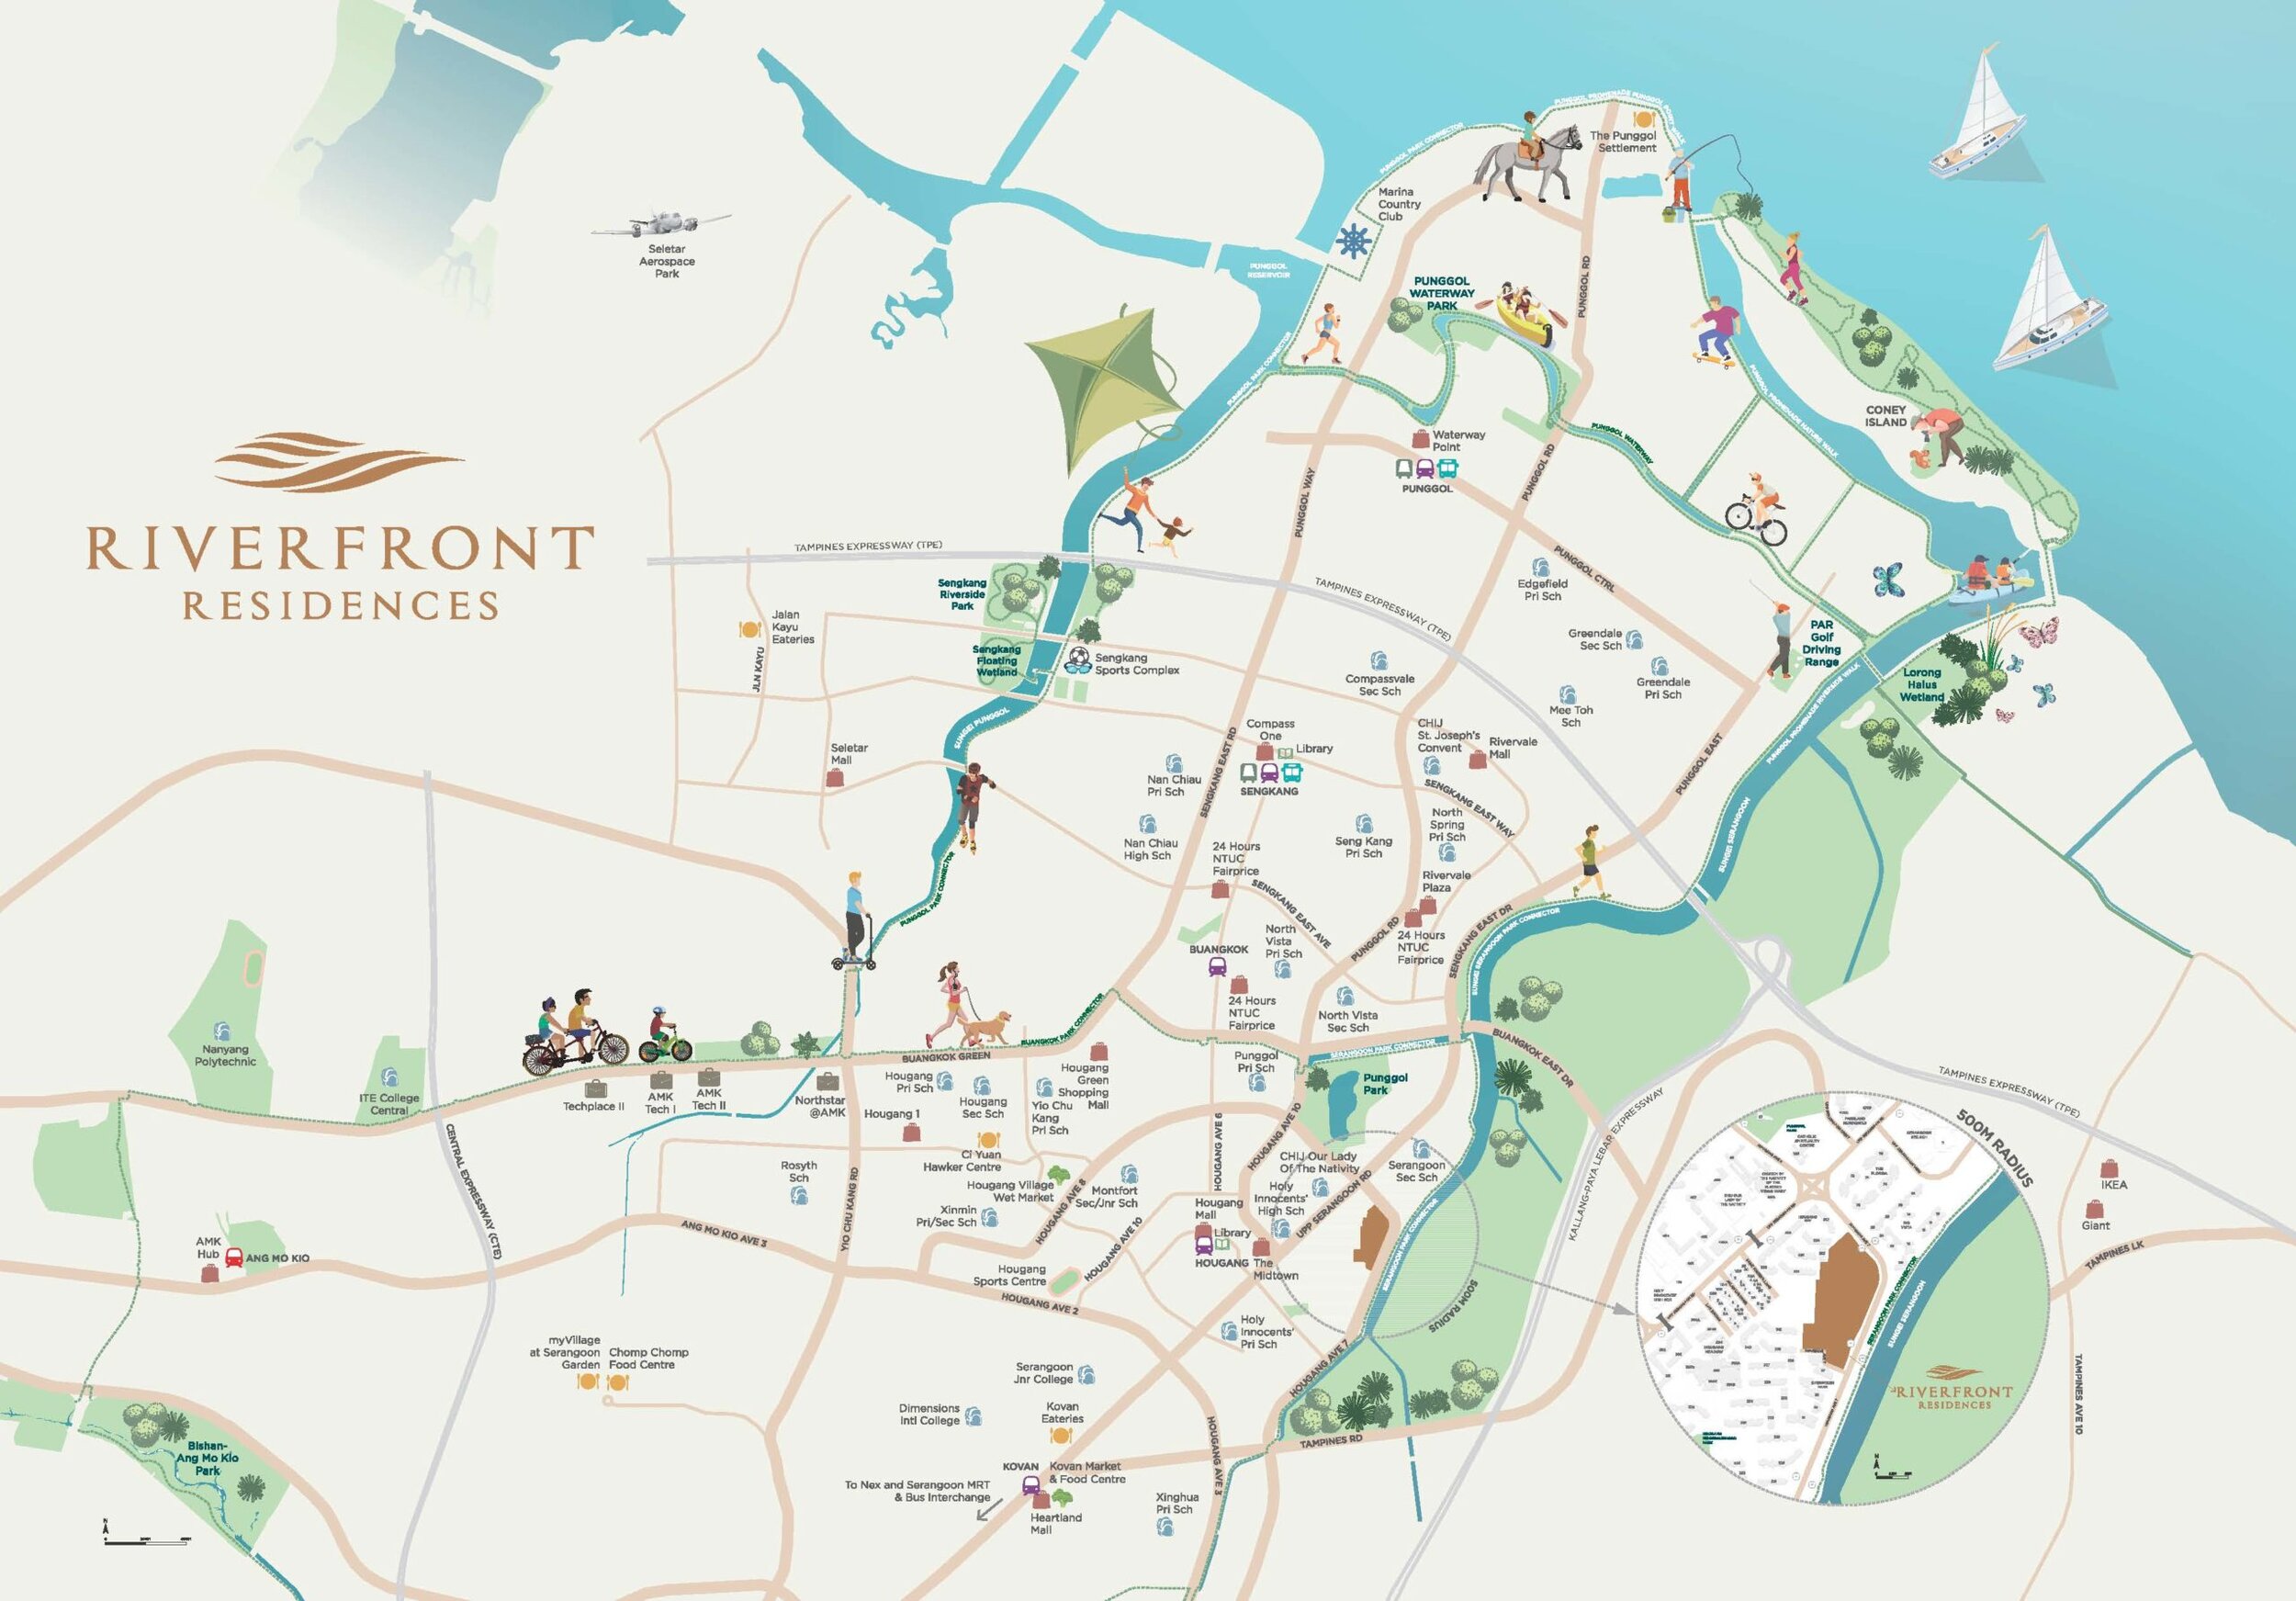 Riverfront-residences-Location-Map.jpeg